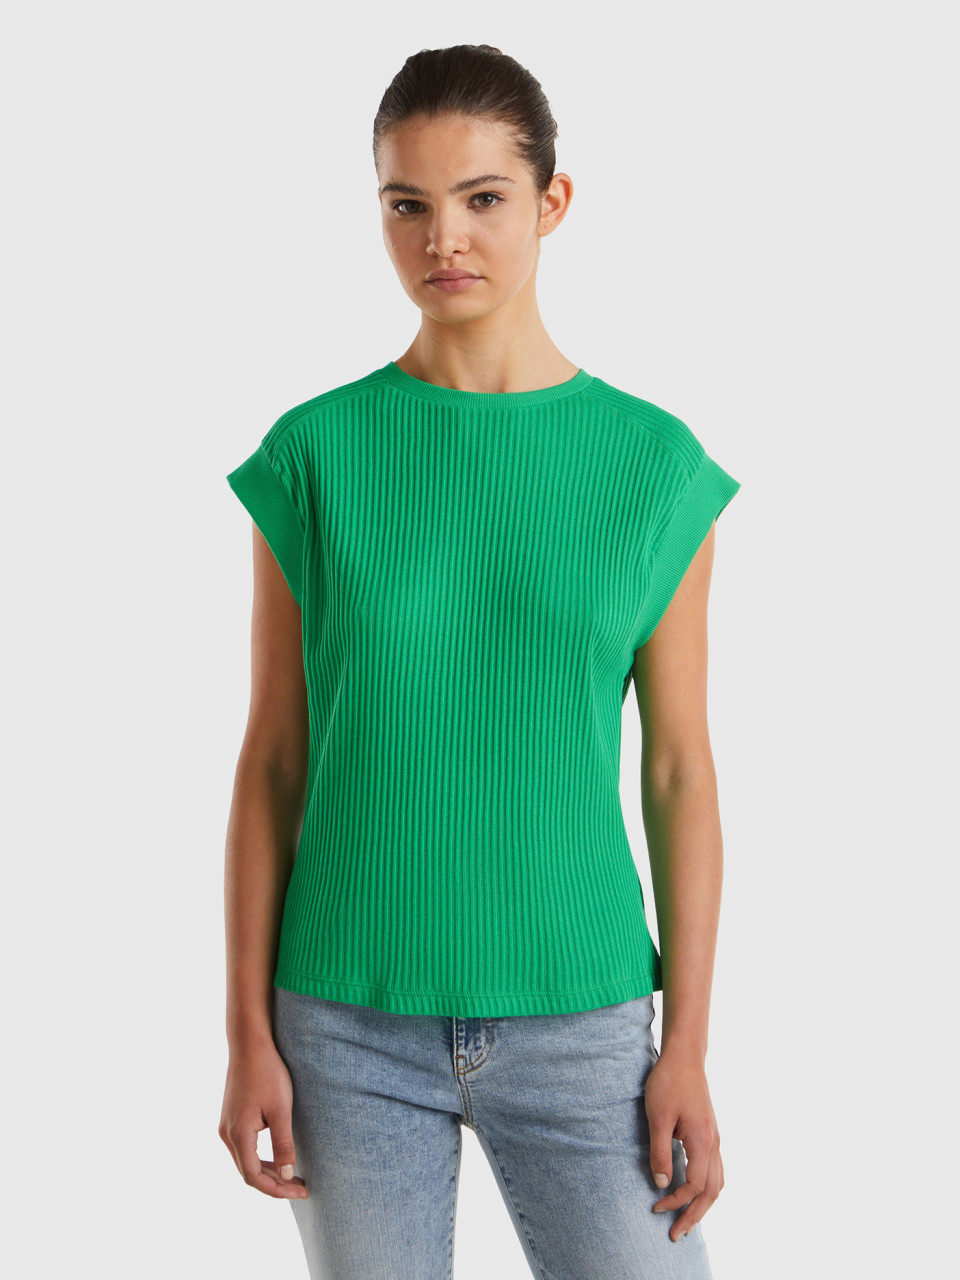 Benetton, Camiseta Comfort Fit, Verde, Mujer